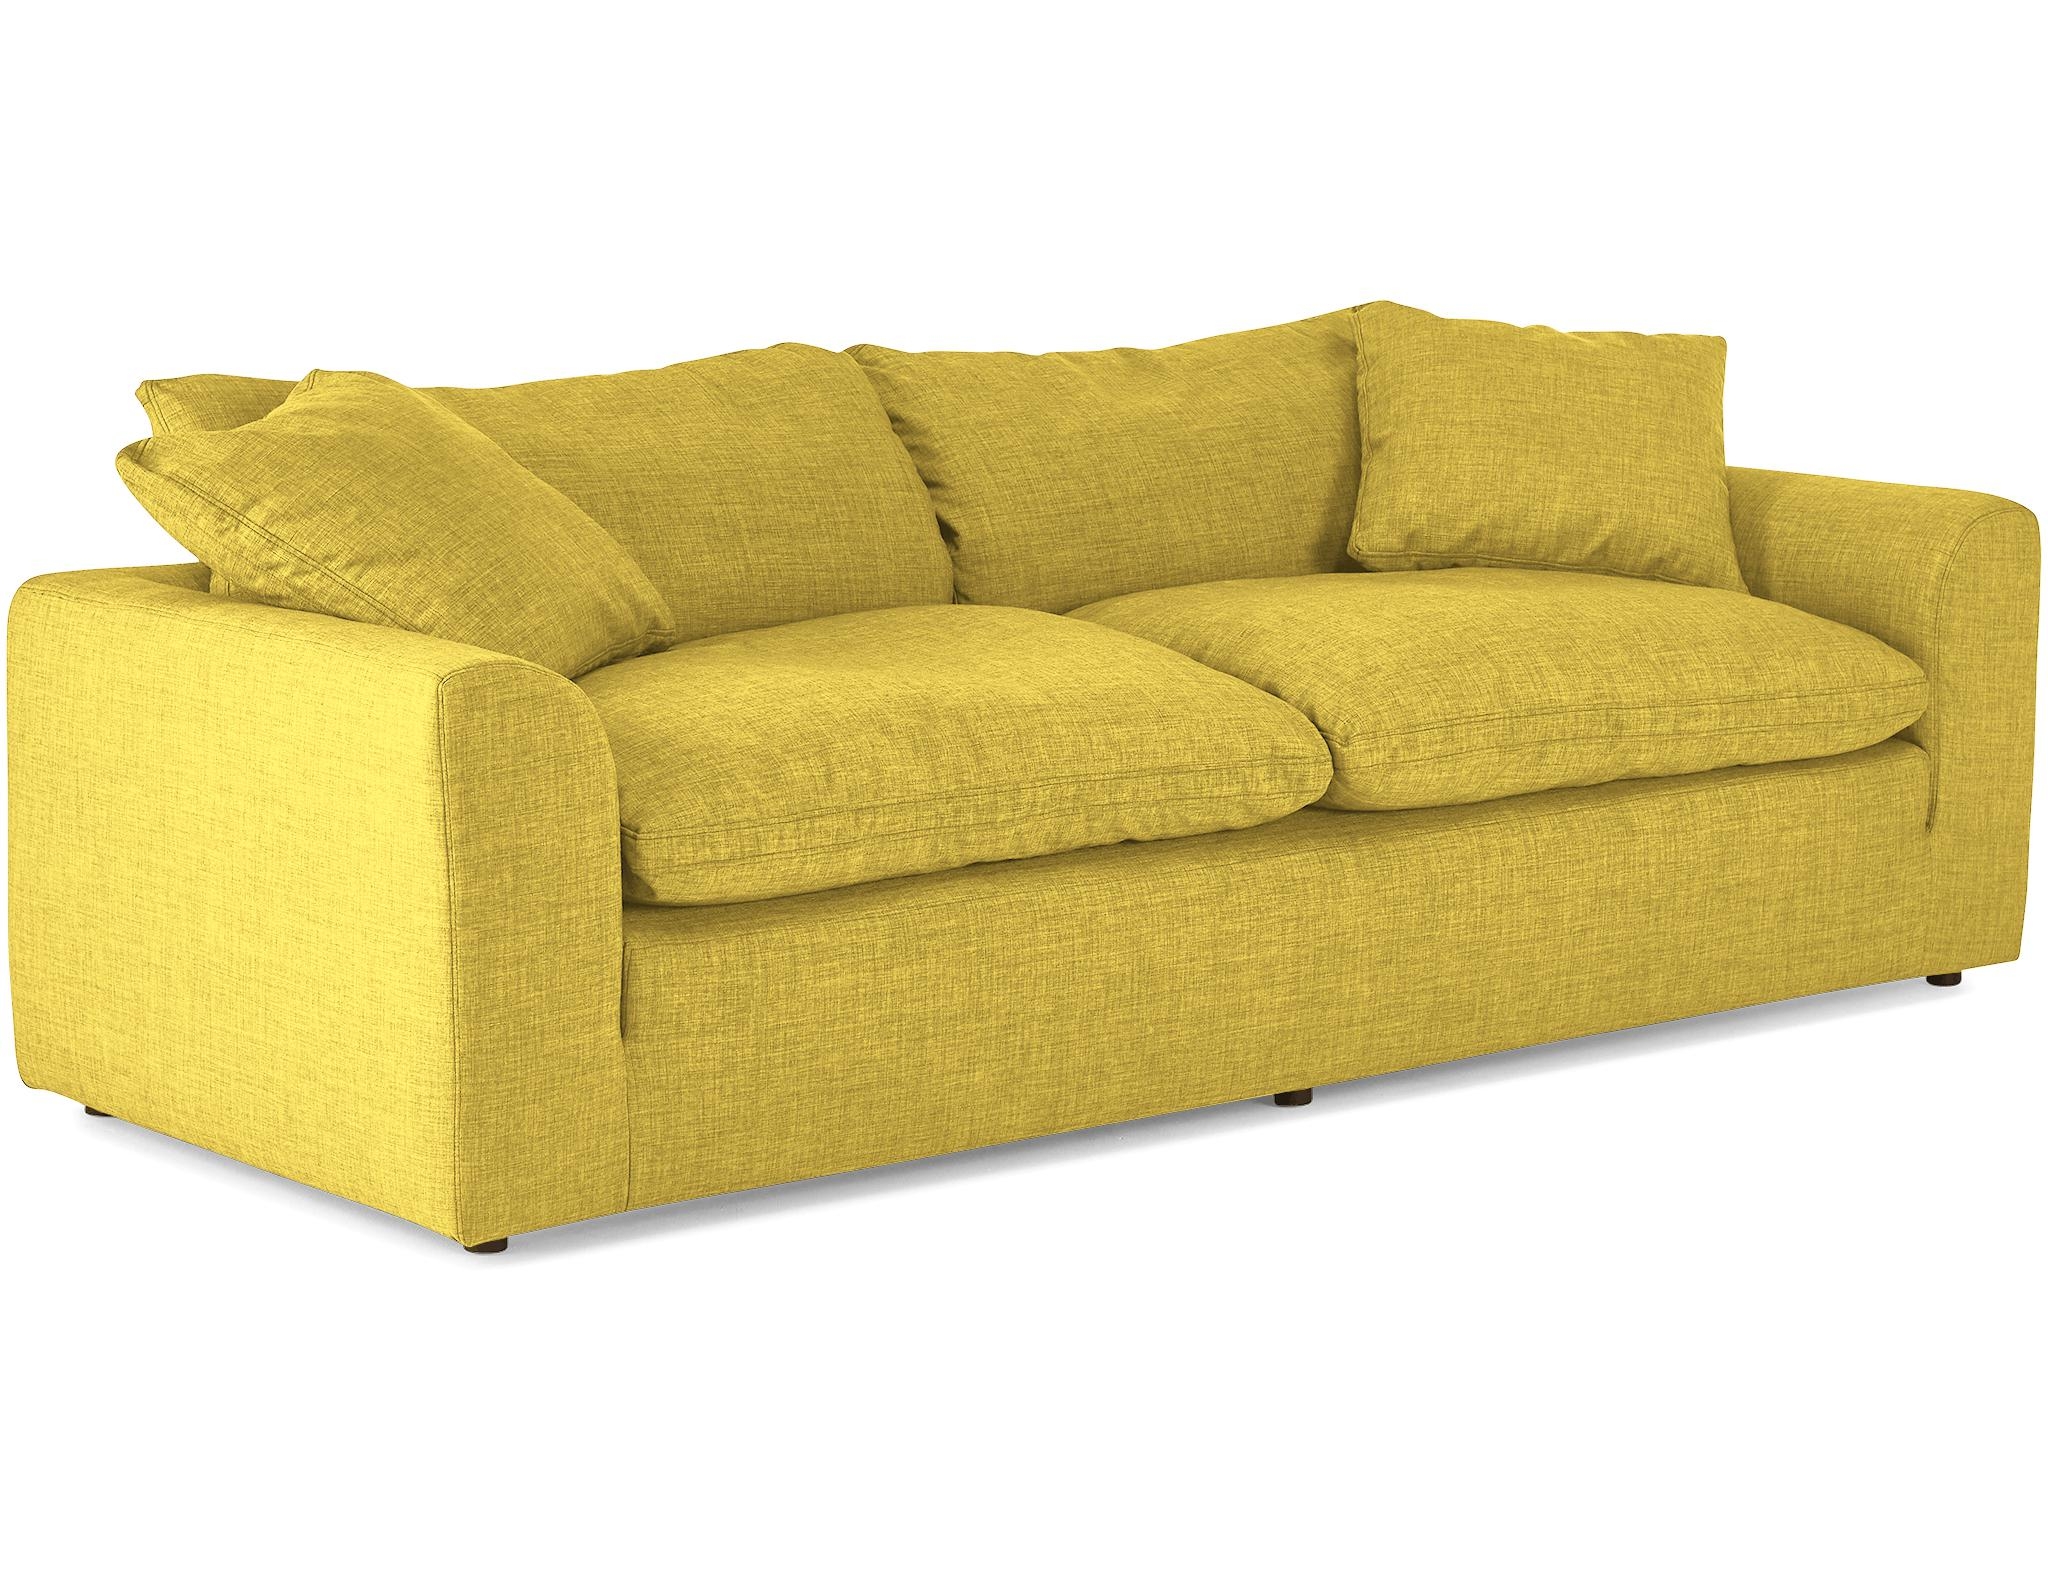 Yellow Bryant Mid Century Modern Sofa - Taylor Golden - Image 1